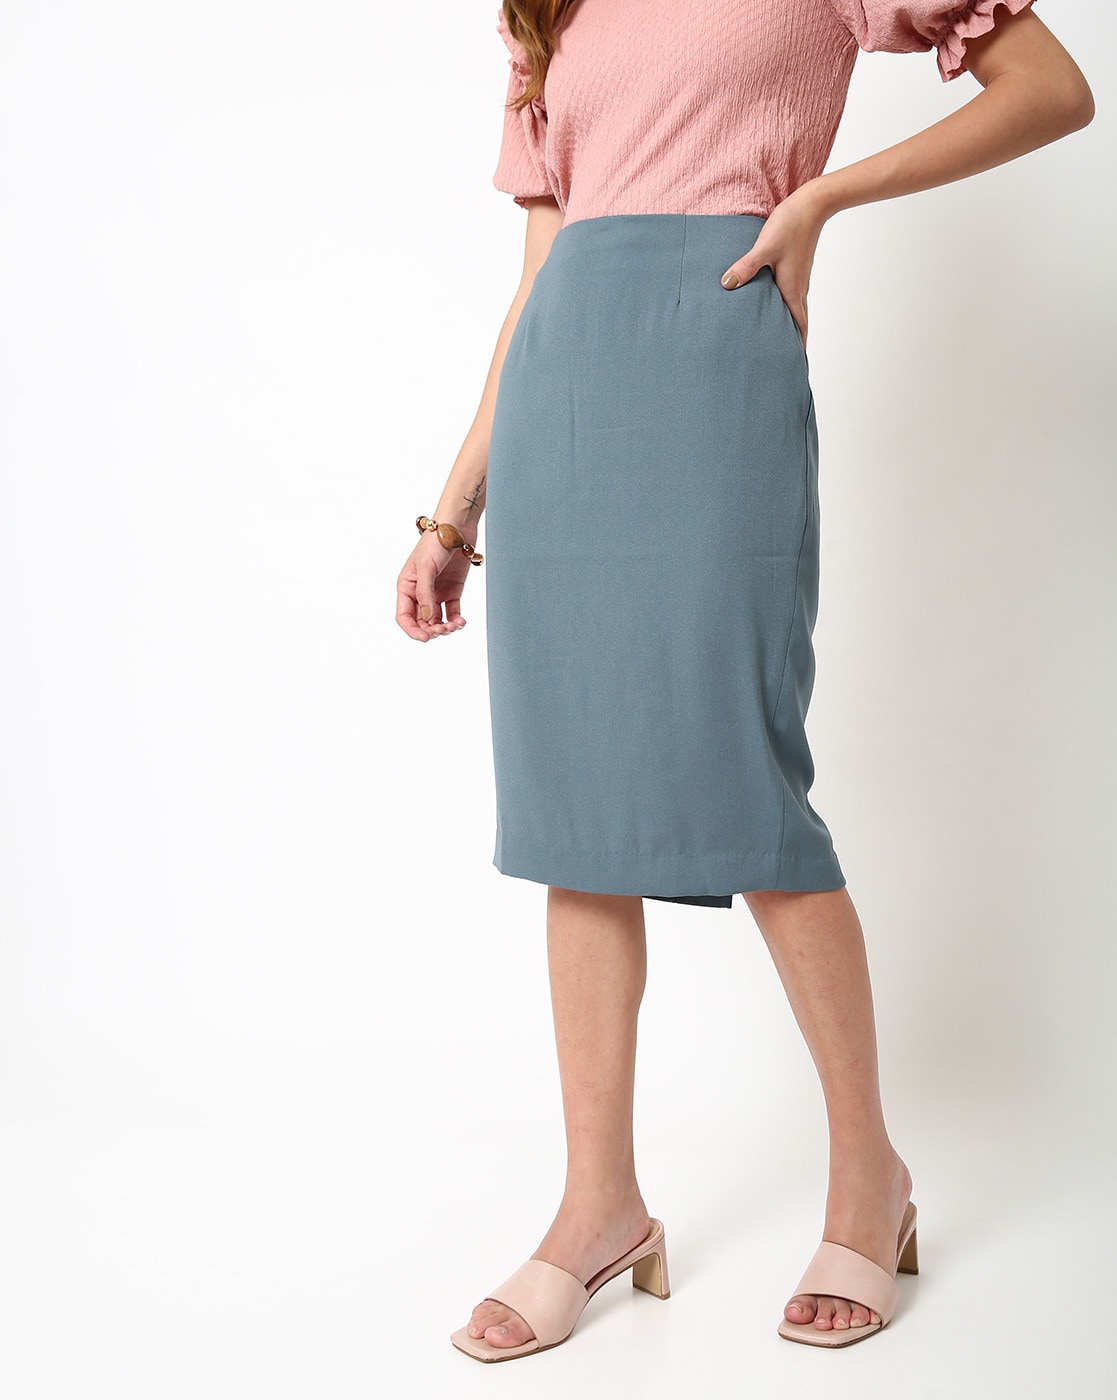 mid-rise pencil skirt